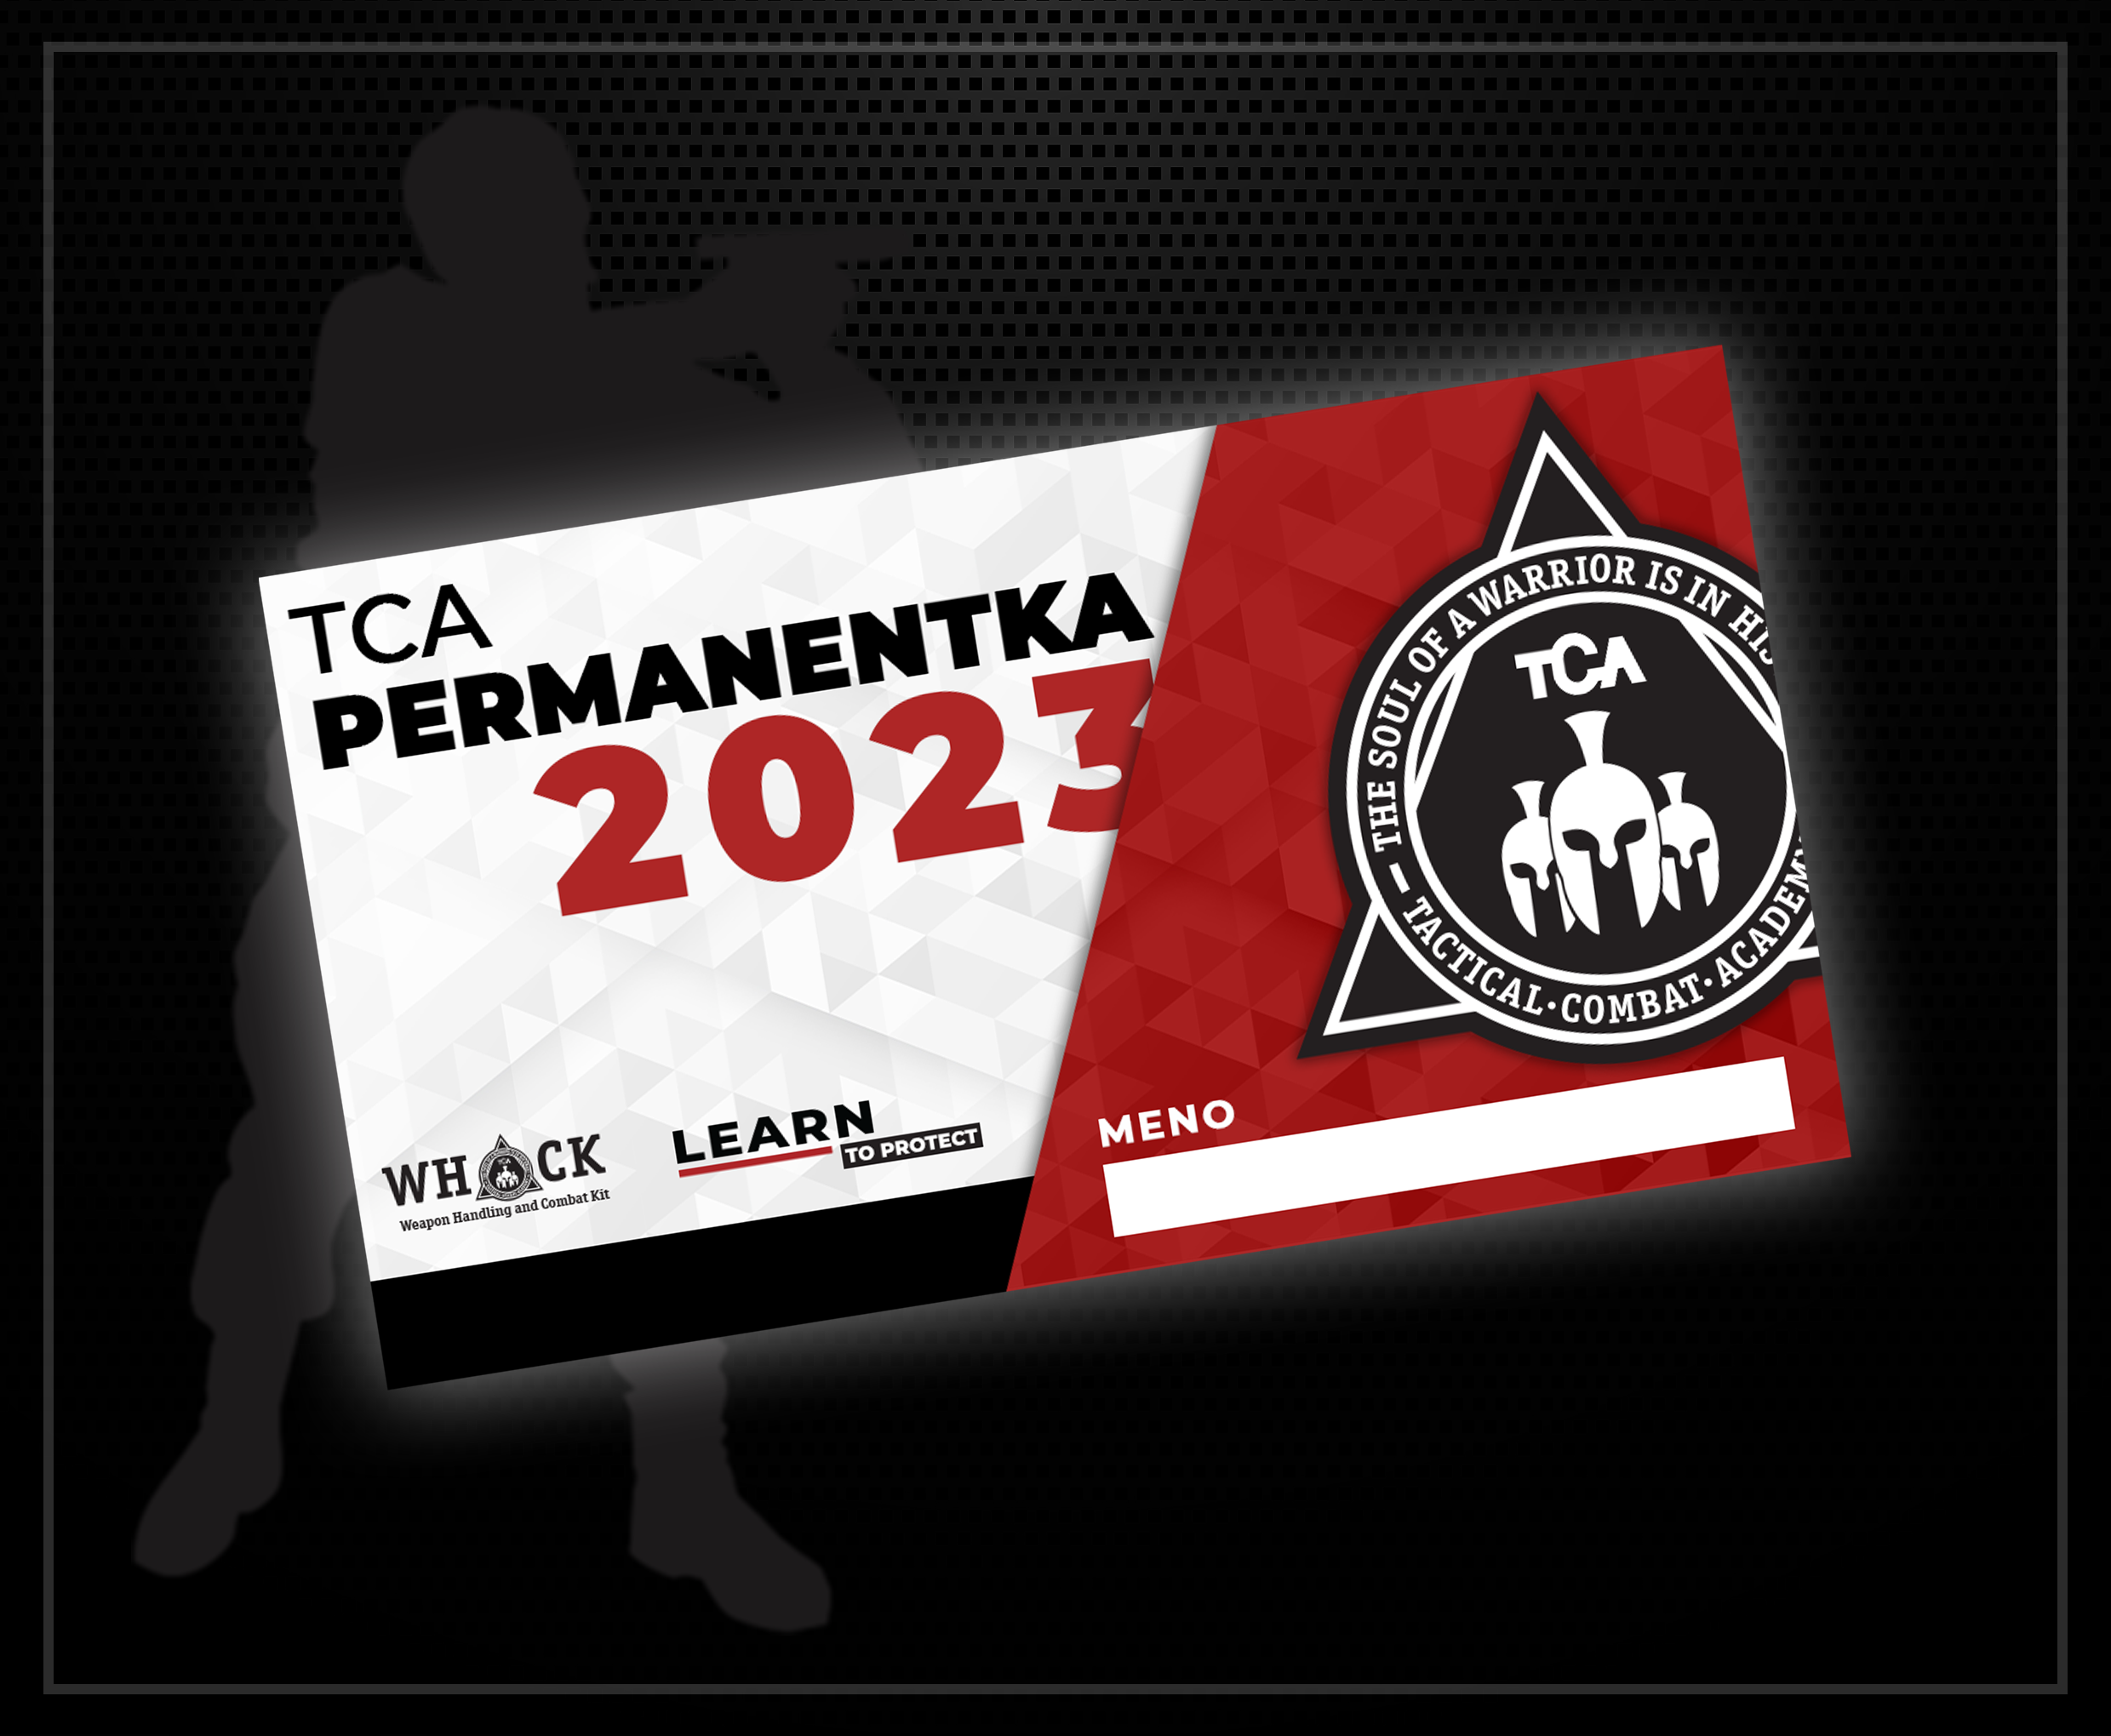 TCA Permanentka 2023